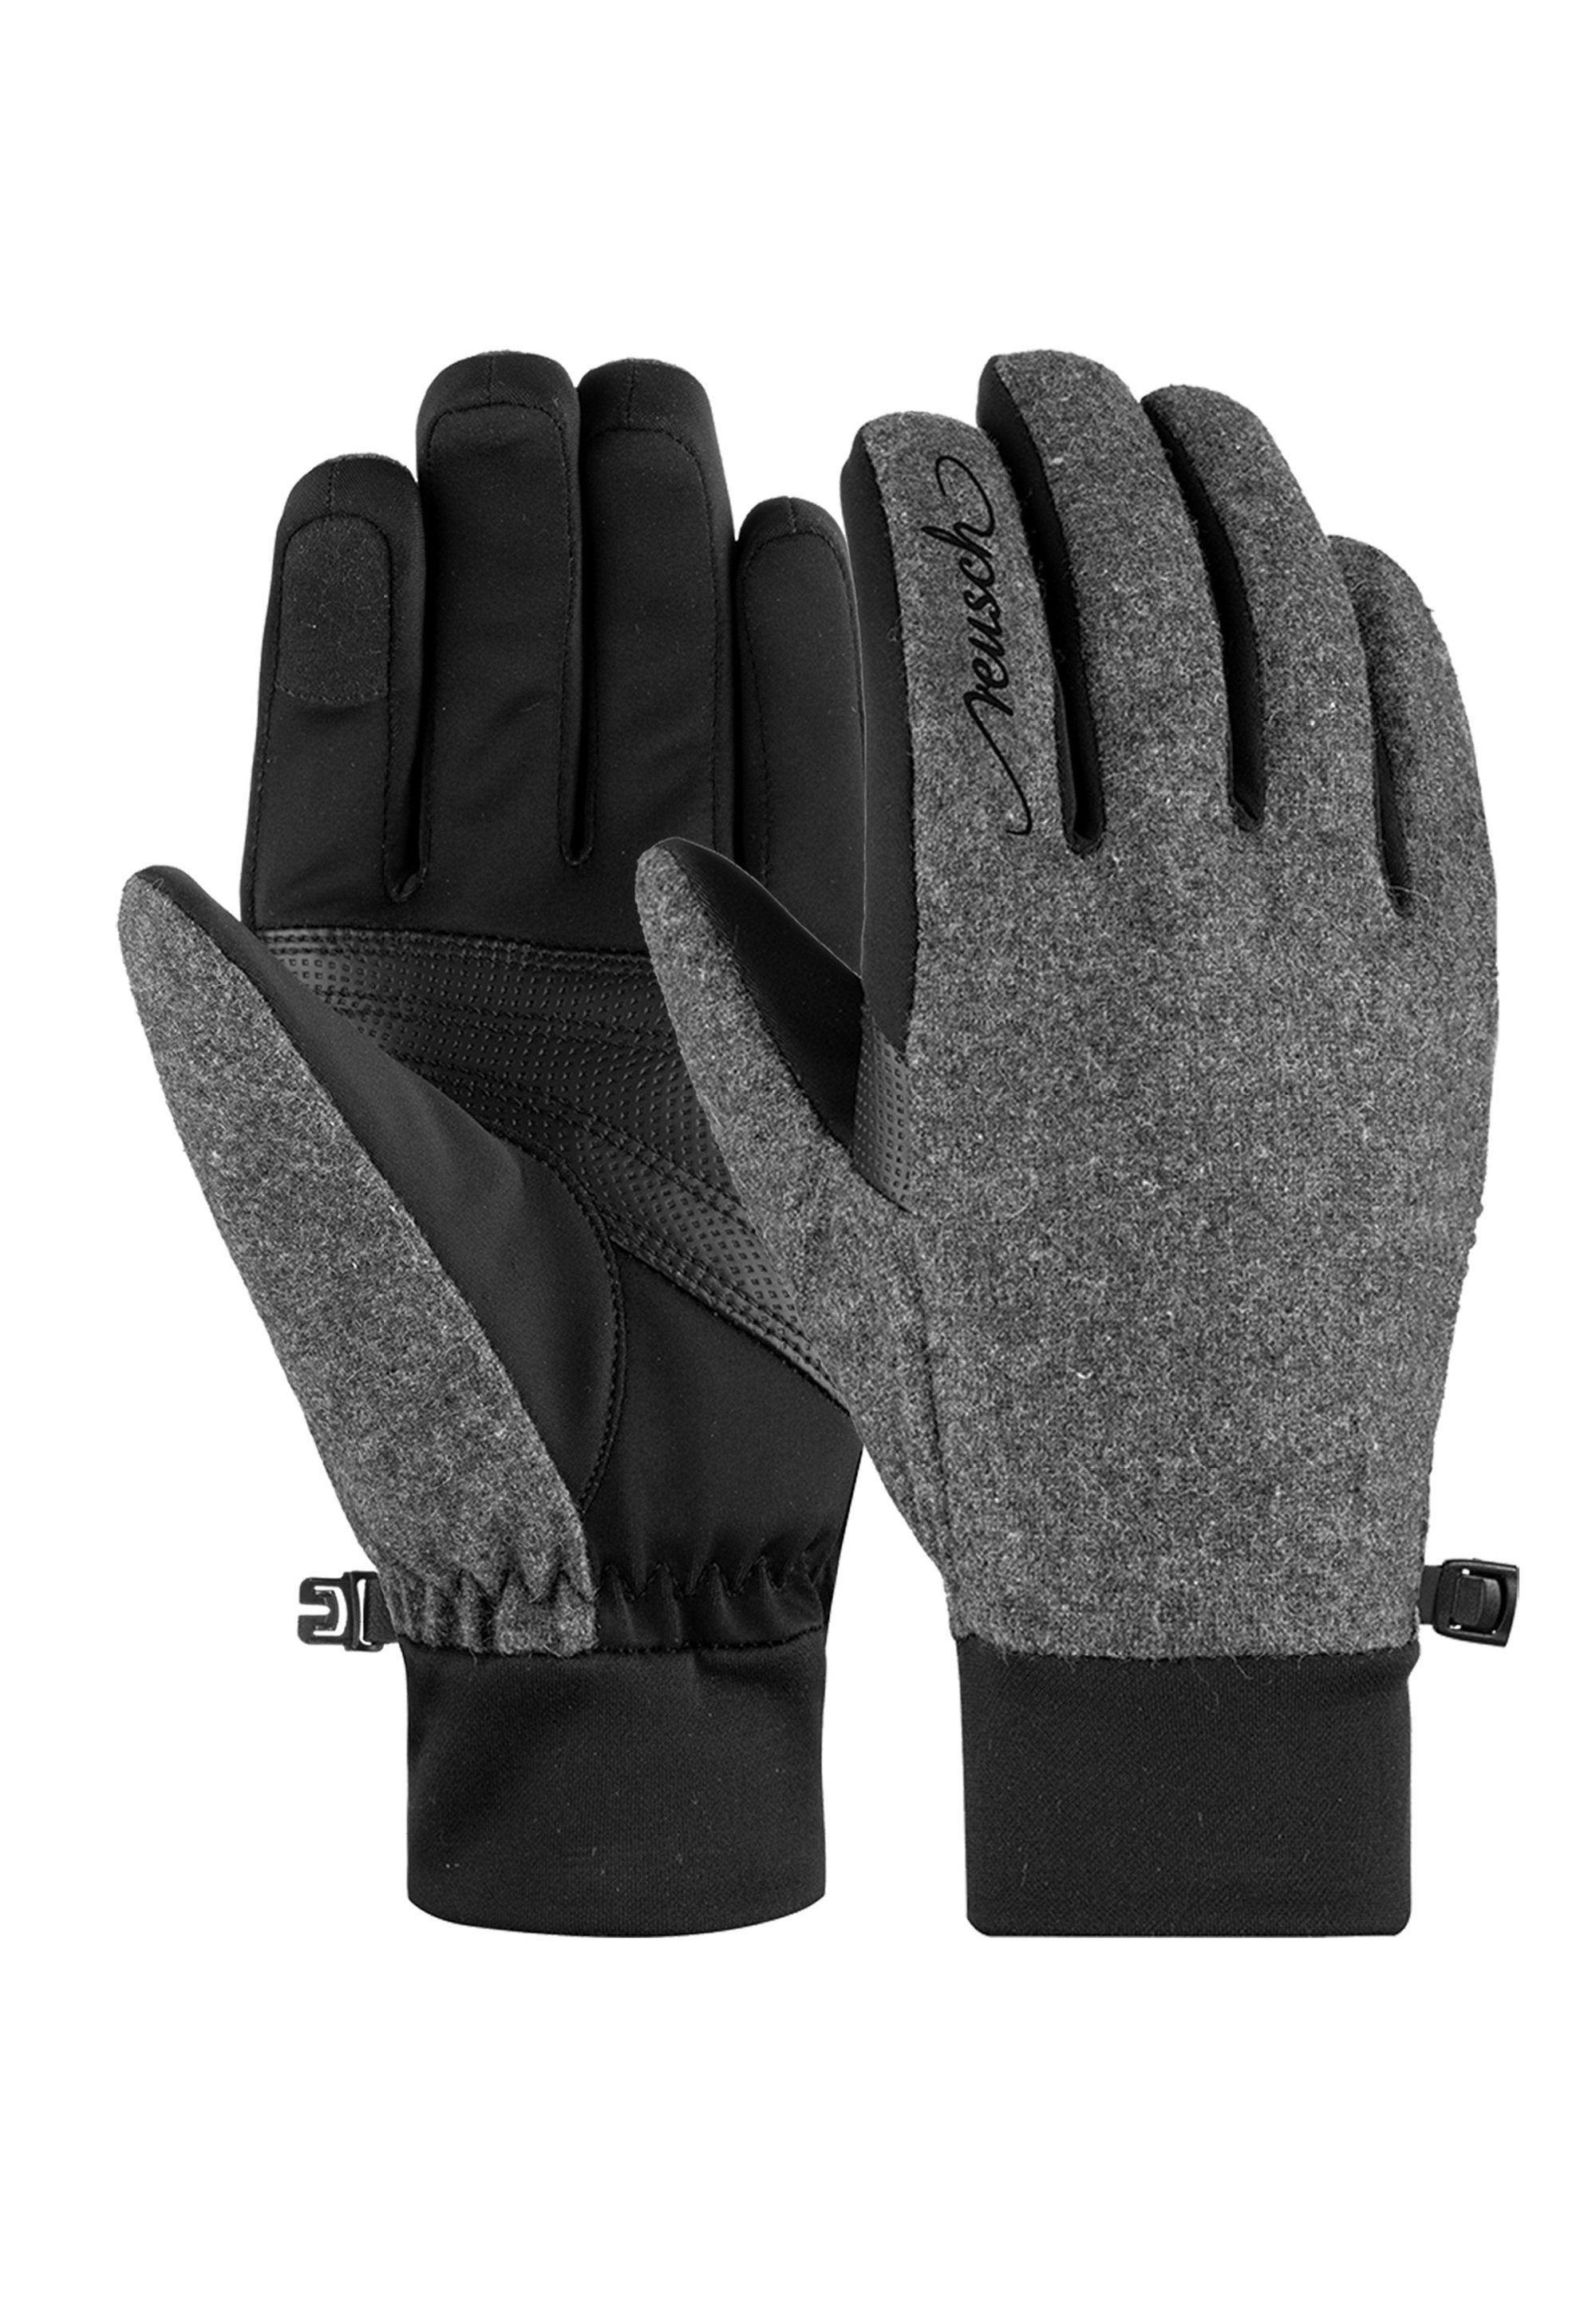 Reusch Skihandschuhe Saskia Touch-tec mit verspielten Design-Elementen schwarz-grau | Handschuhe